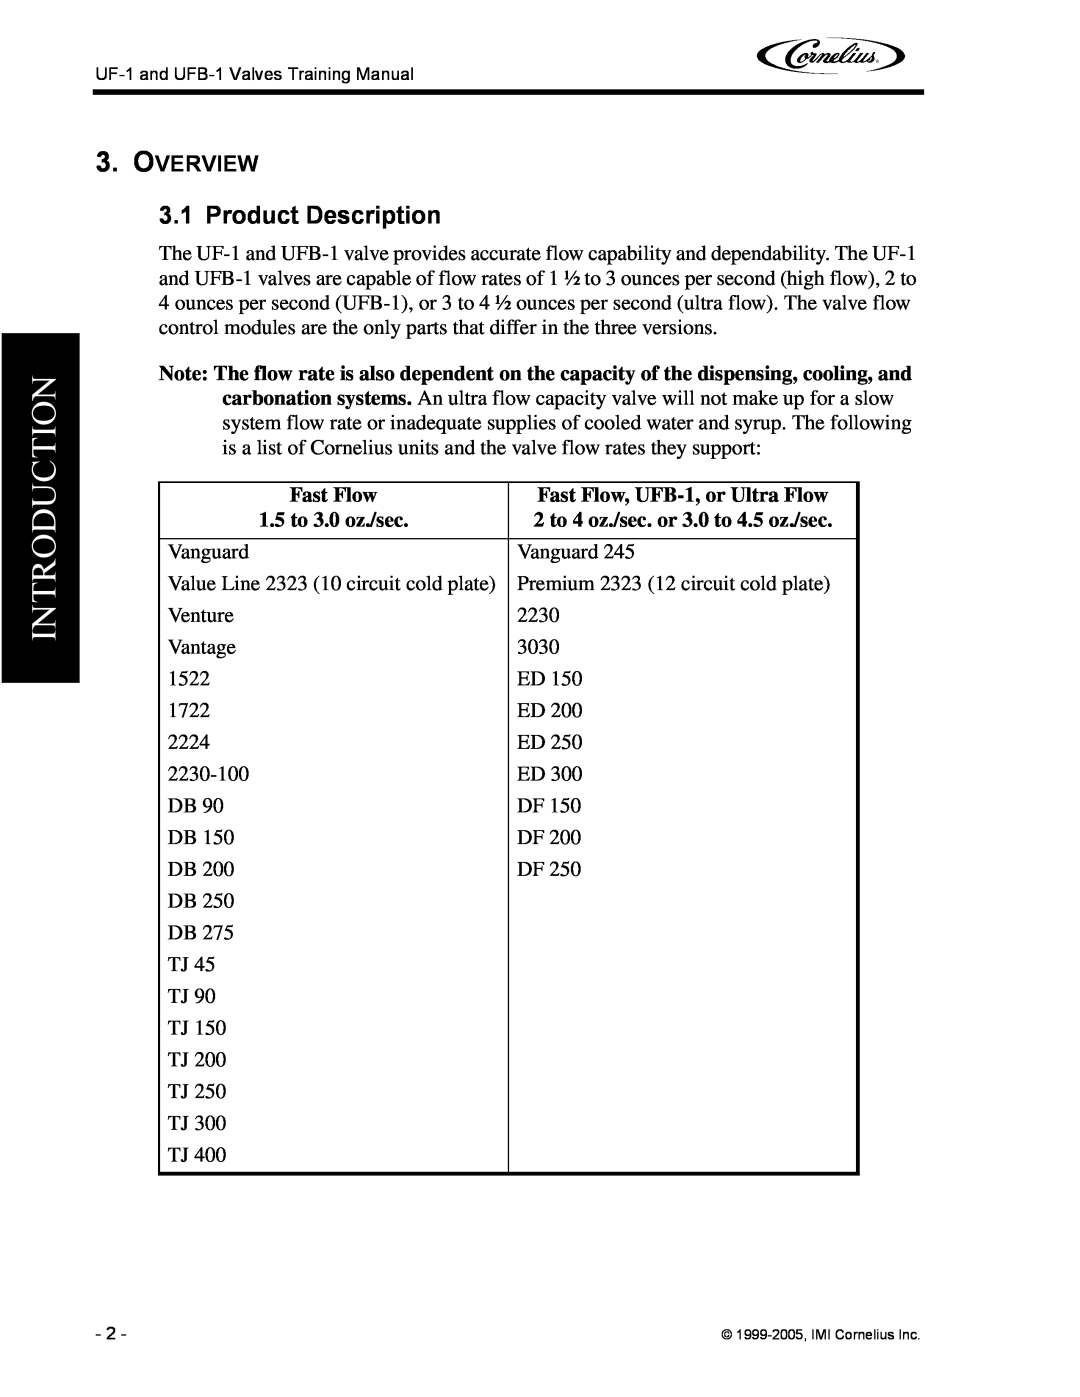 Cornelius UFB-1, UF-1 manual Product Description, Overview, Introduction 